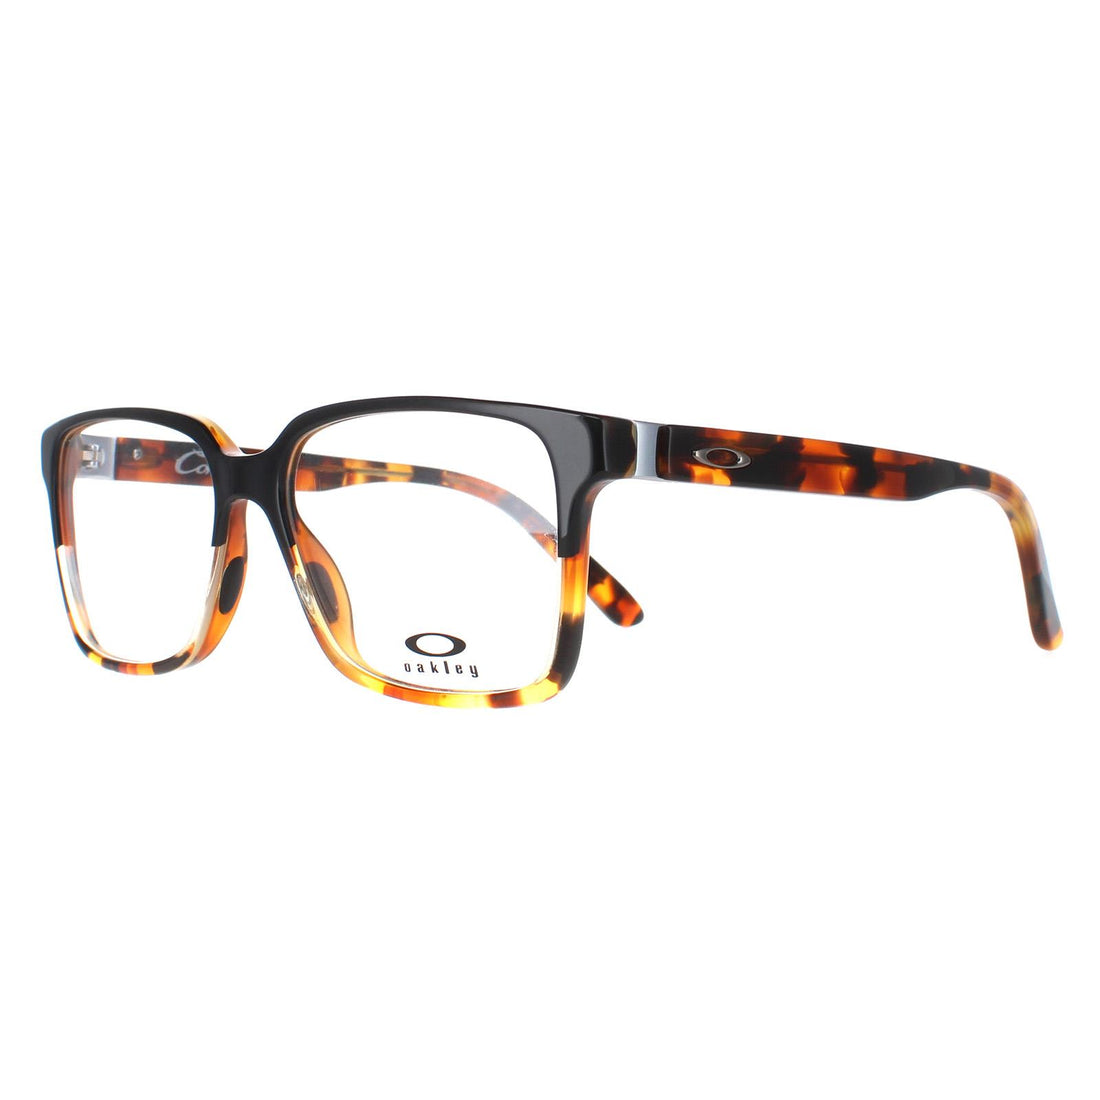 Oakley Confession Glasses Frames